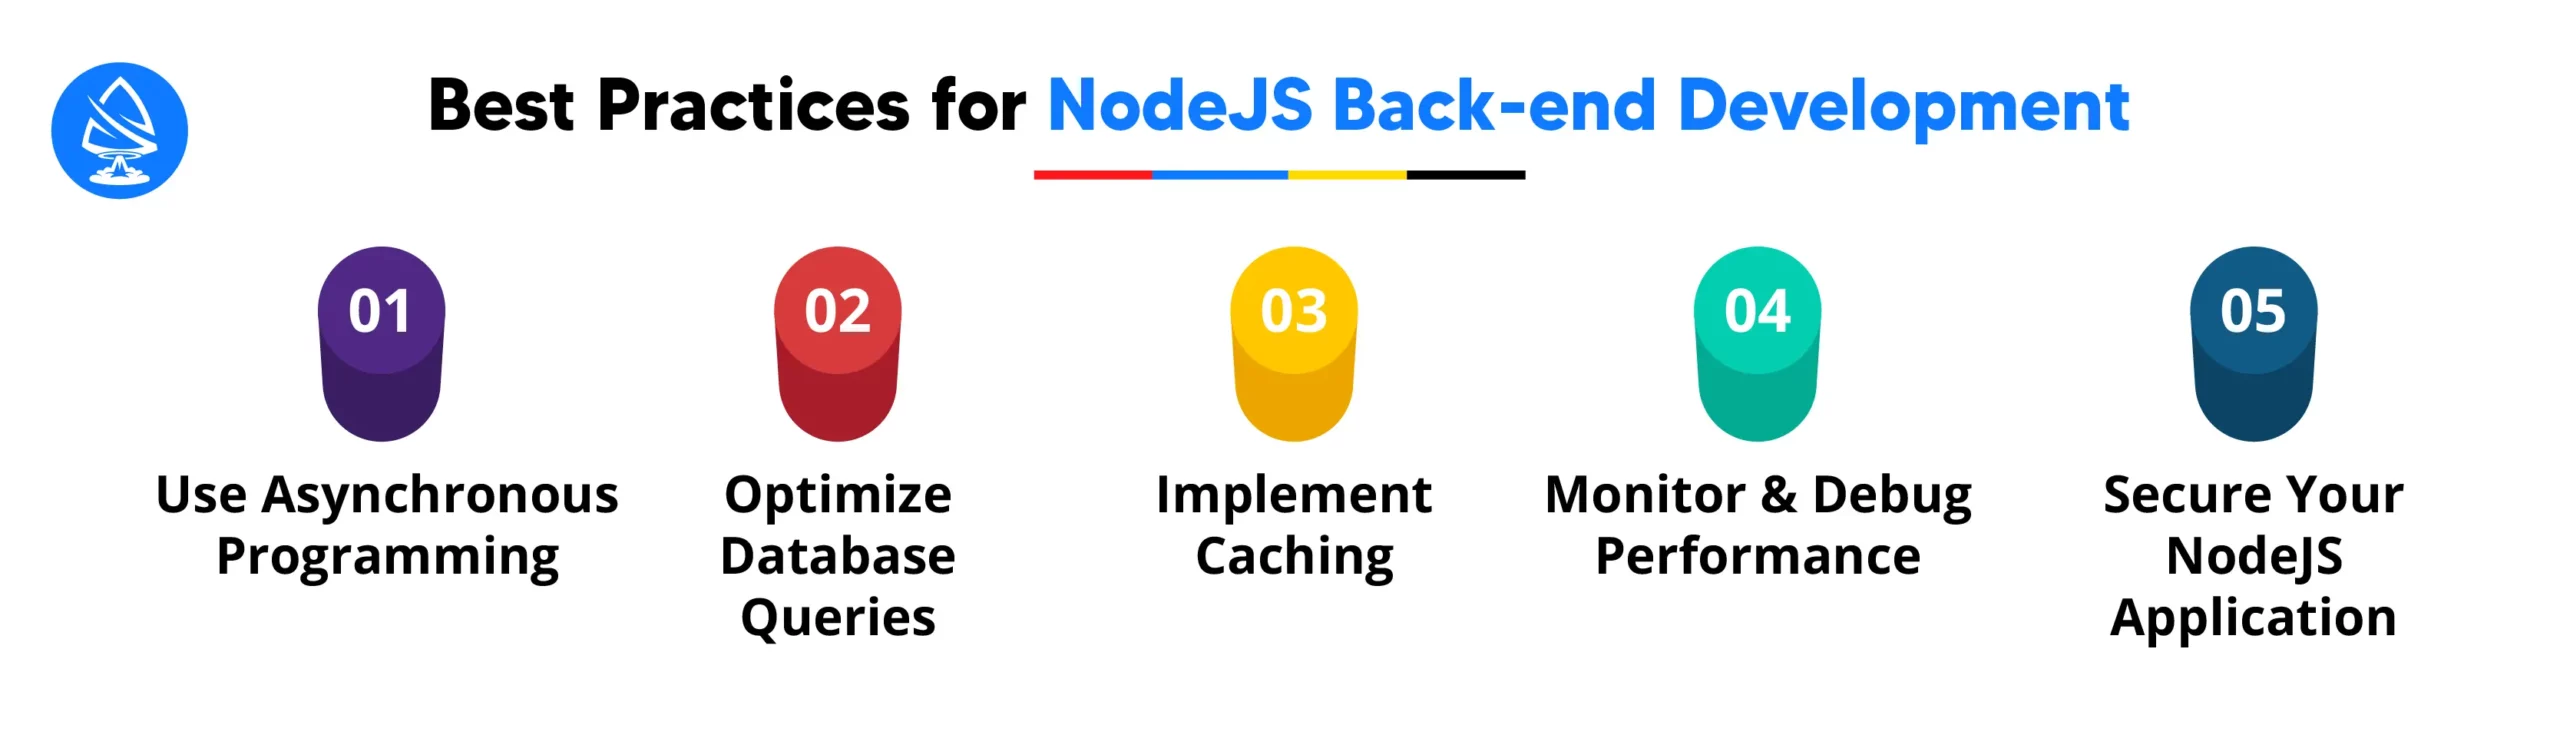 Best Practices for NodeJS Back-end Development